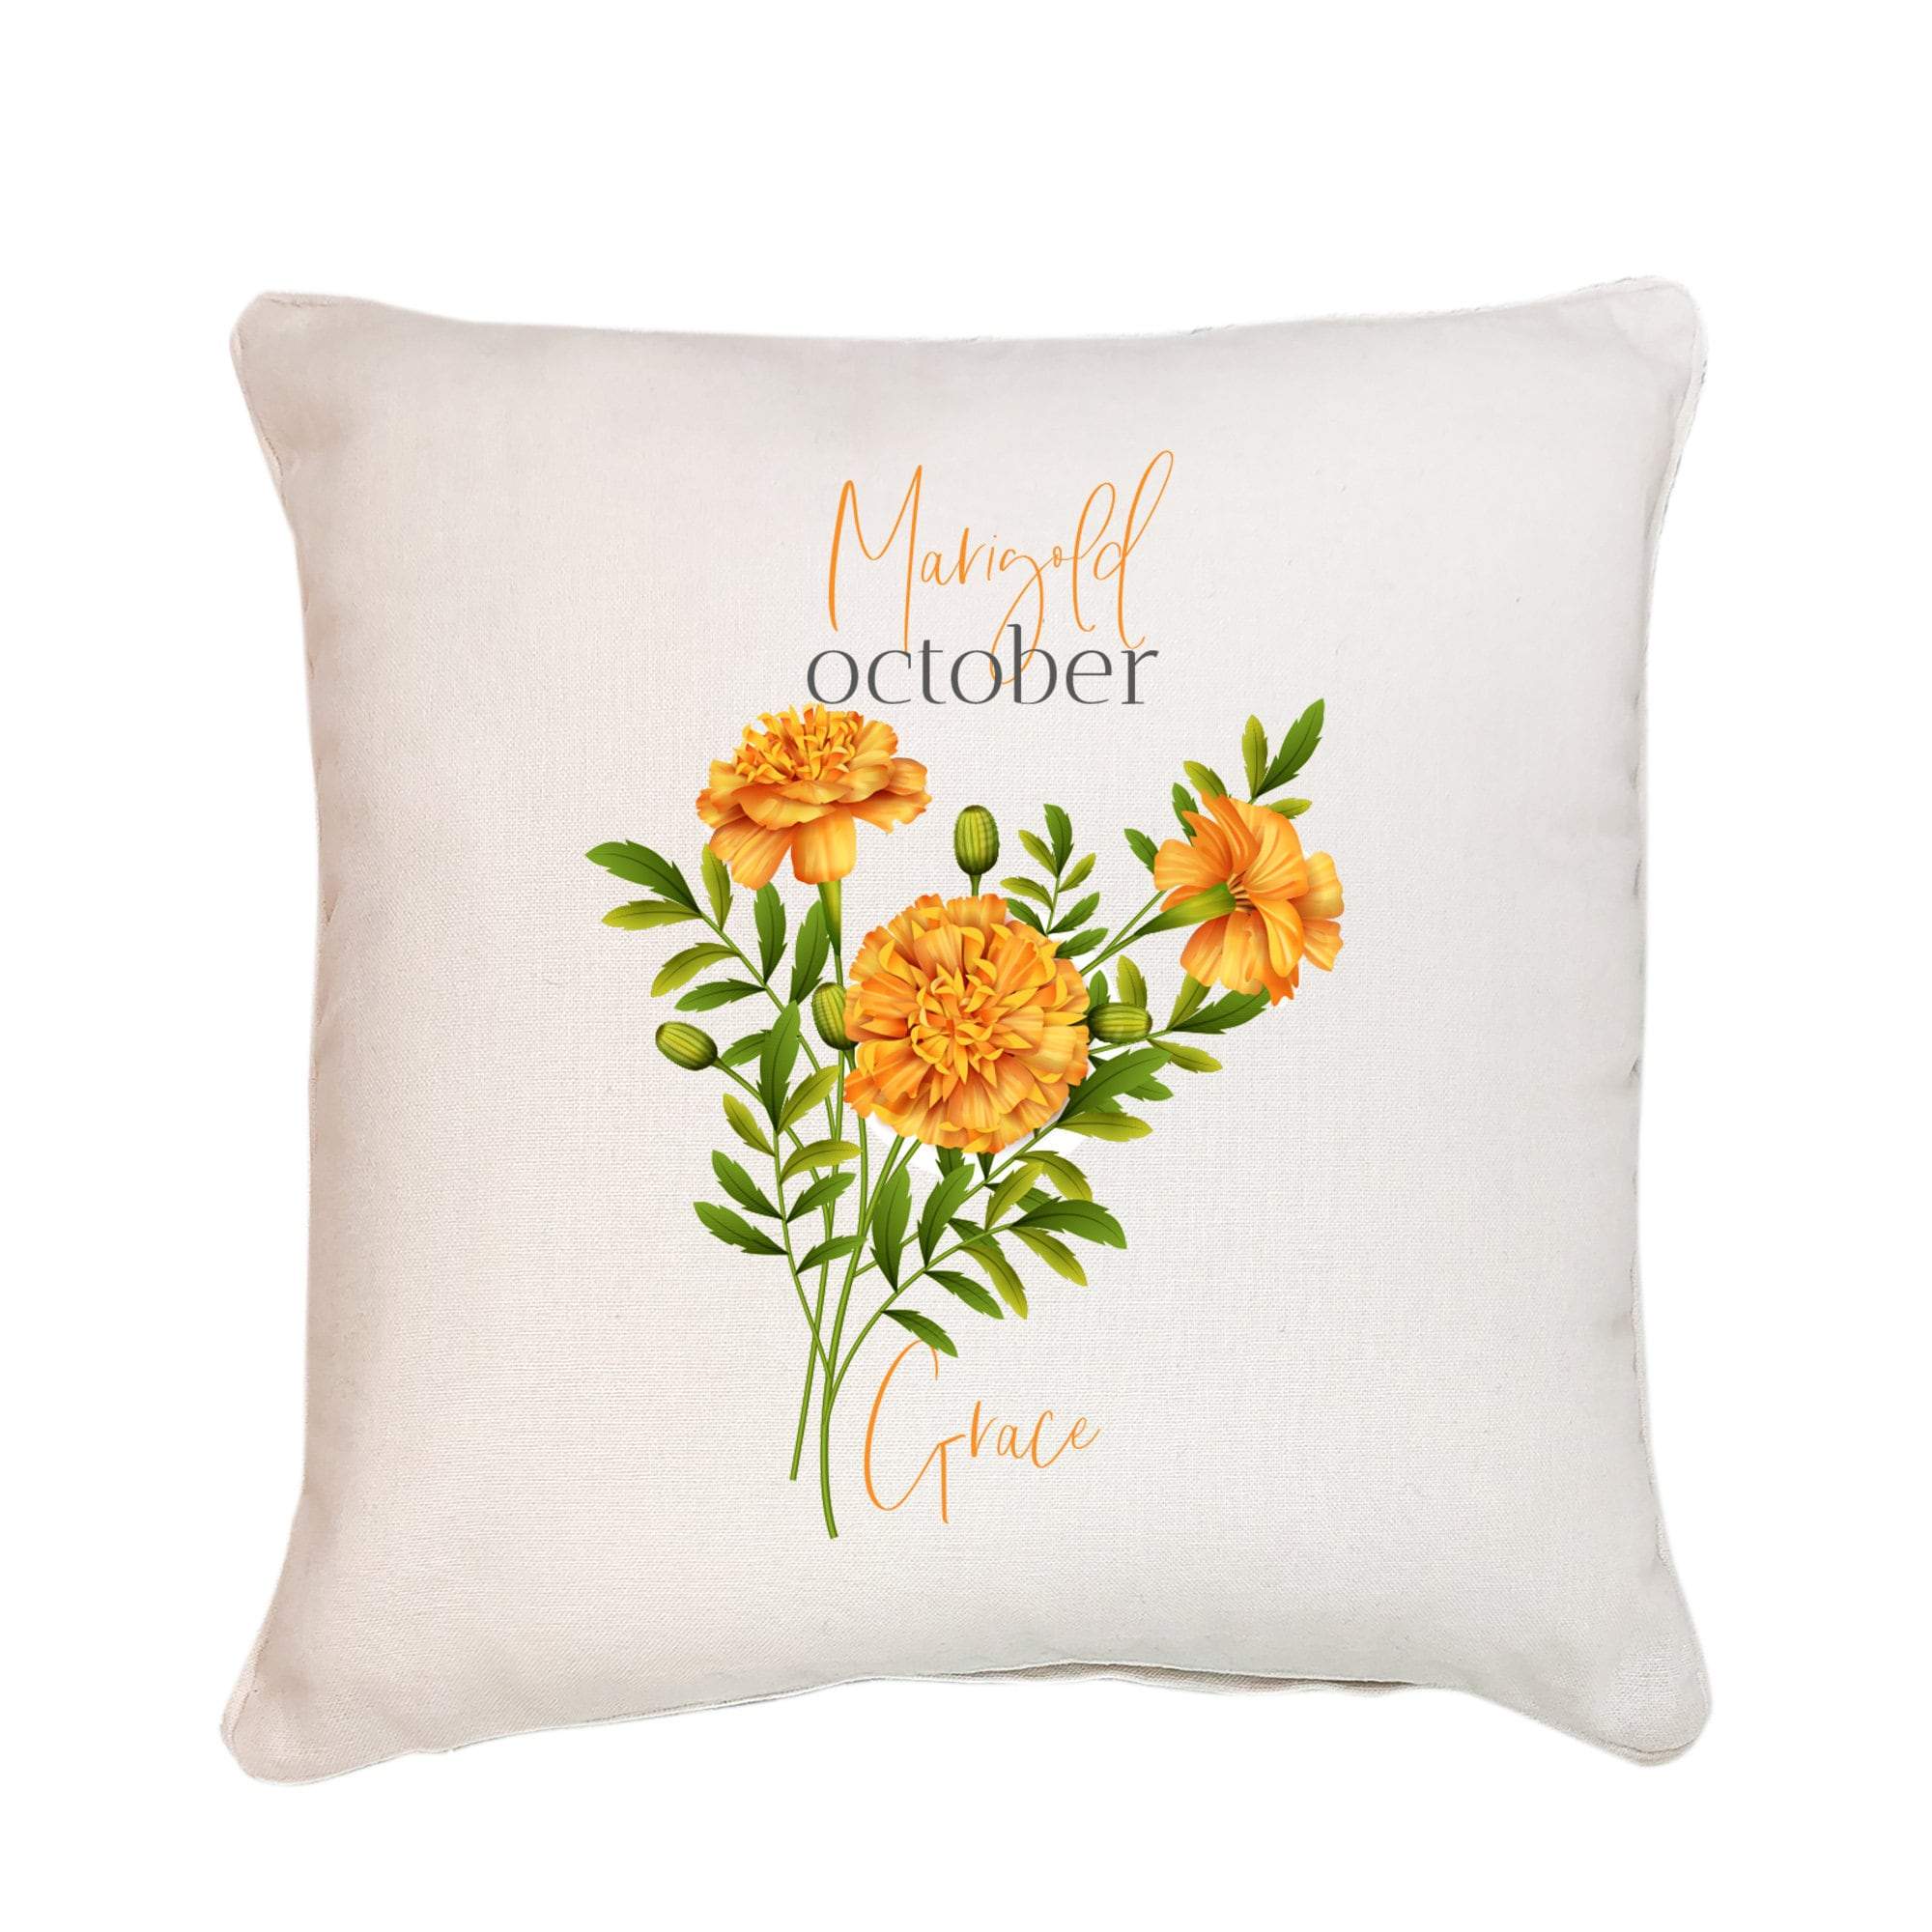 Personalised birth flower cushion, October birth flower marigold, Floral design birthday gift